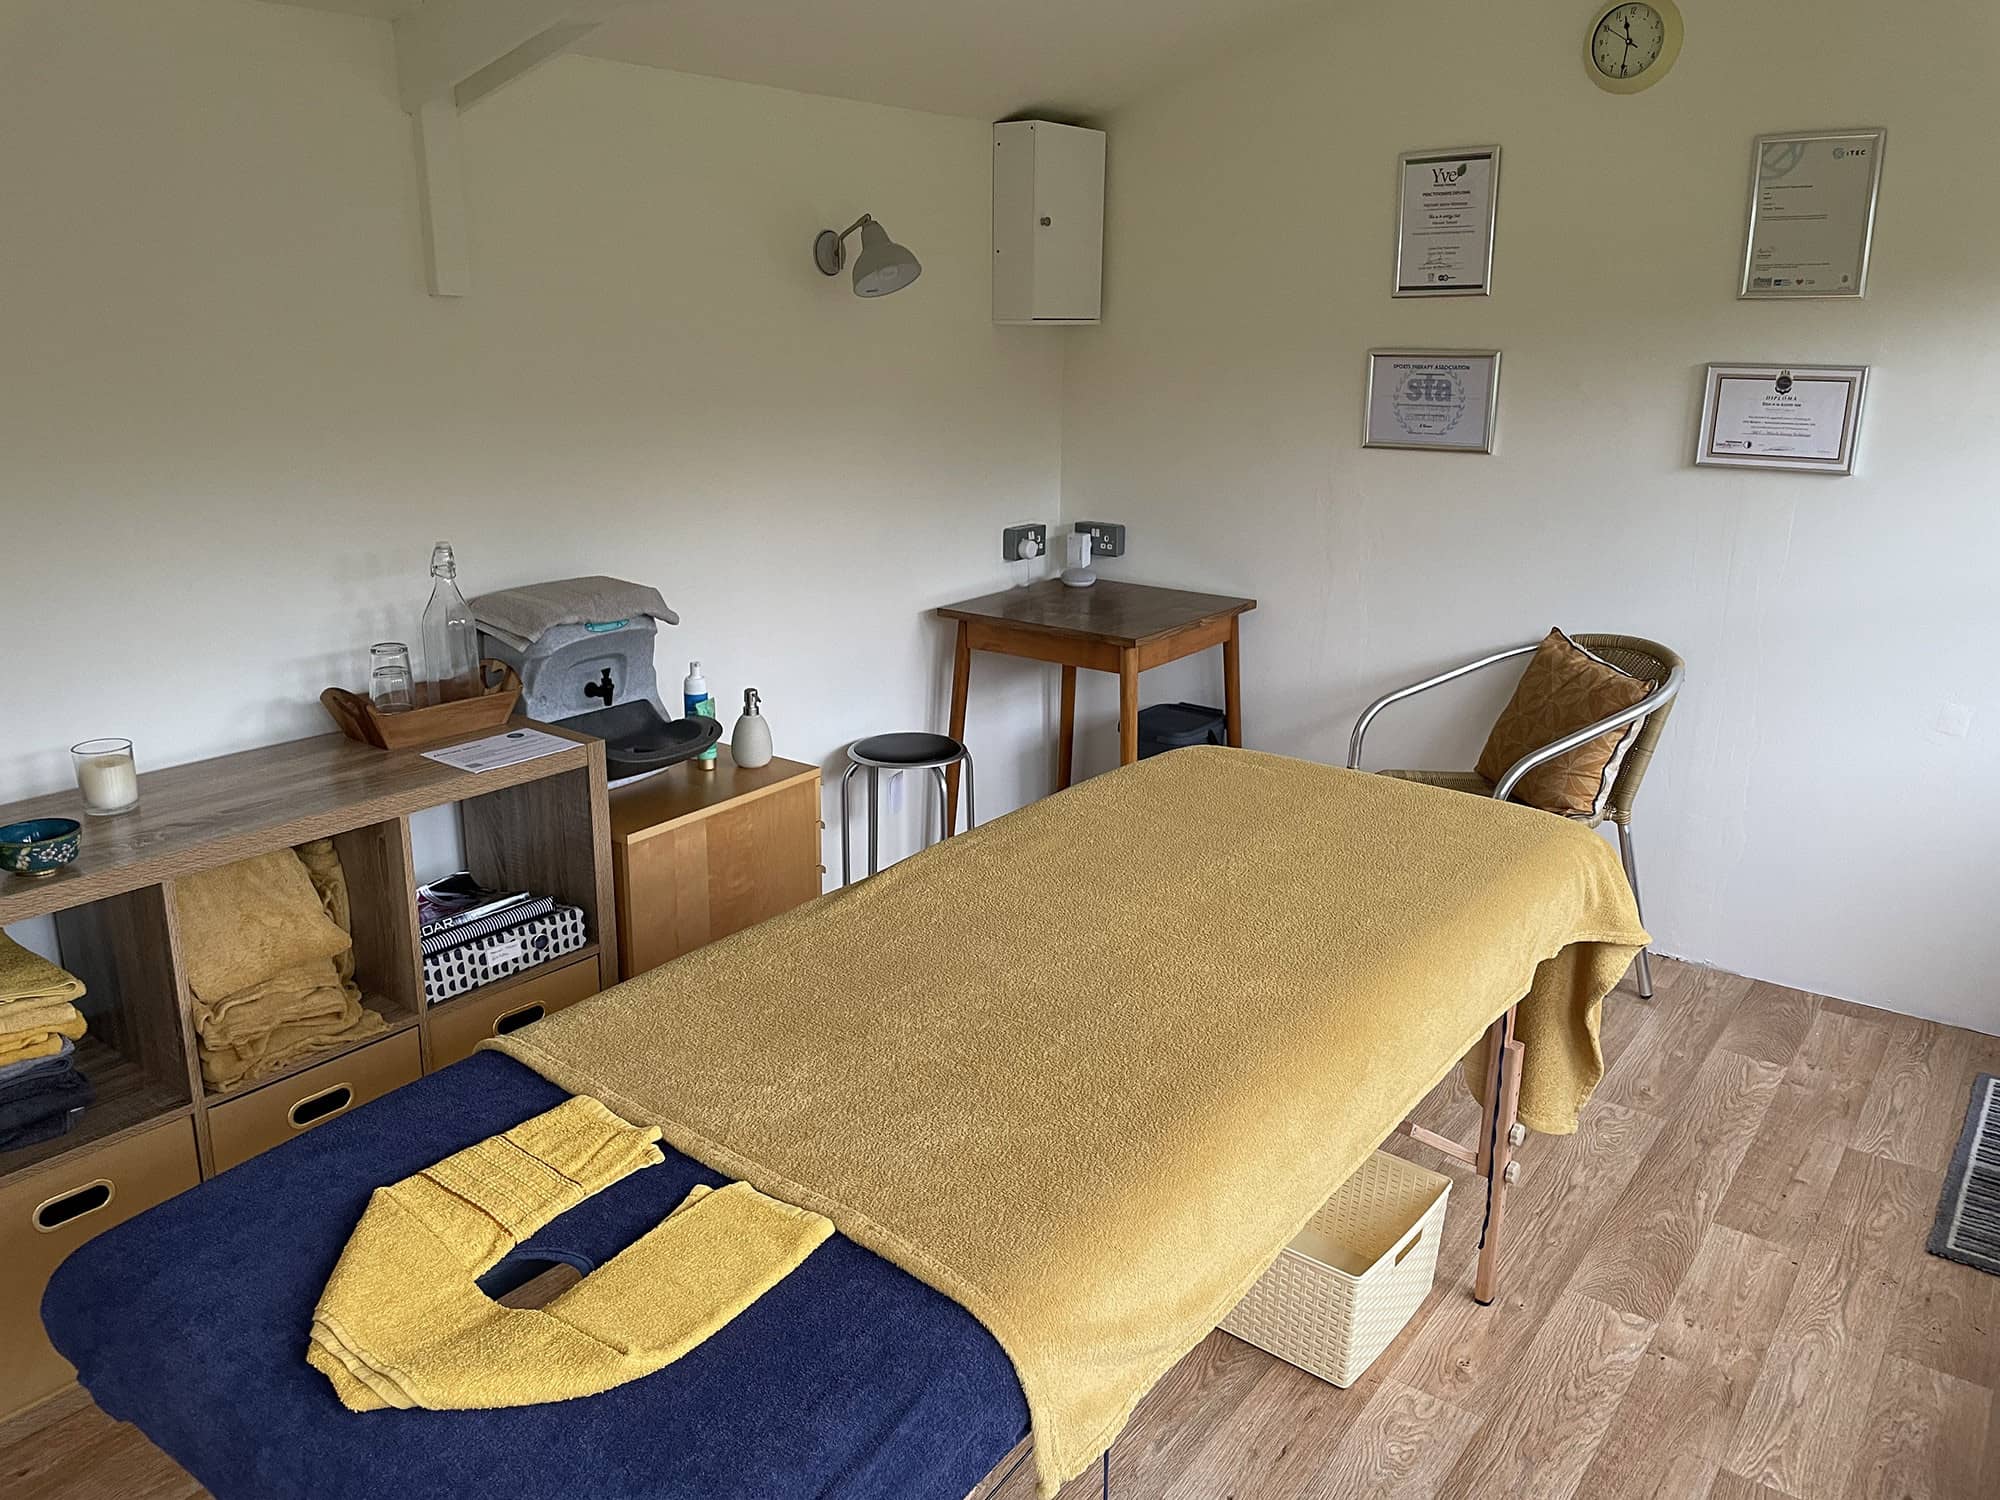 Kenninghall massage therapy room interior